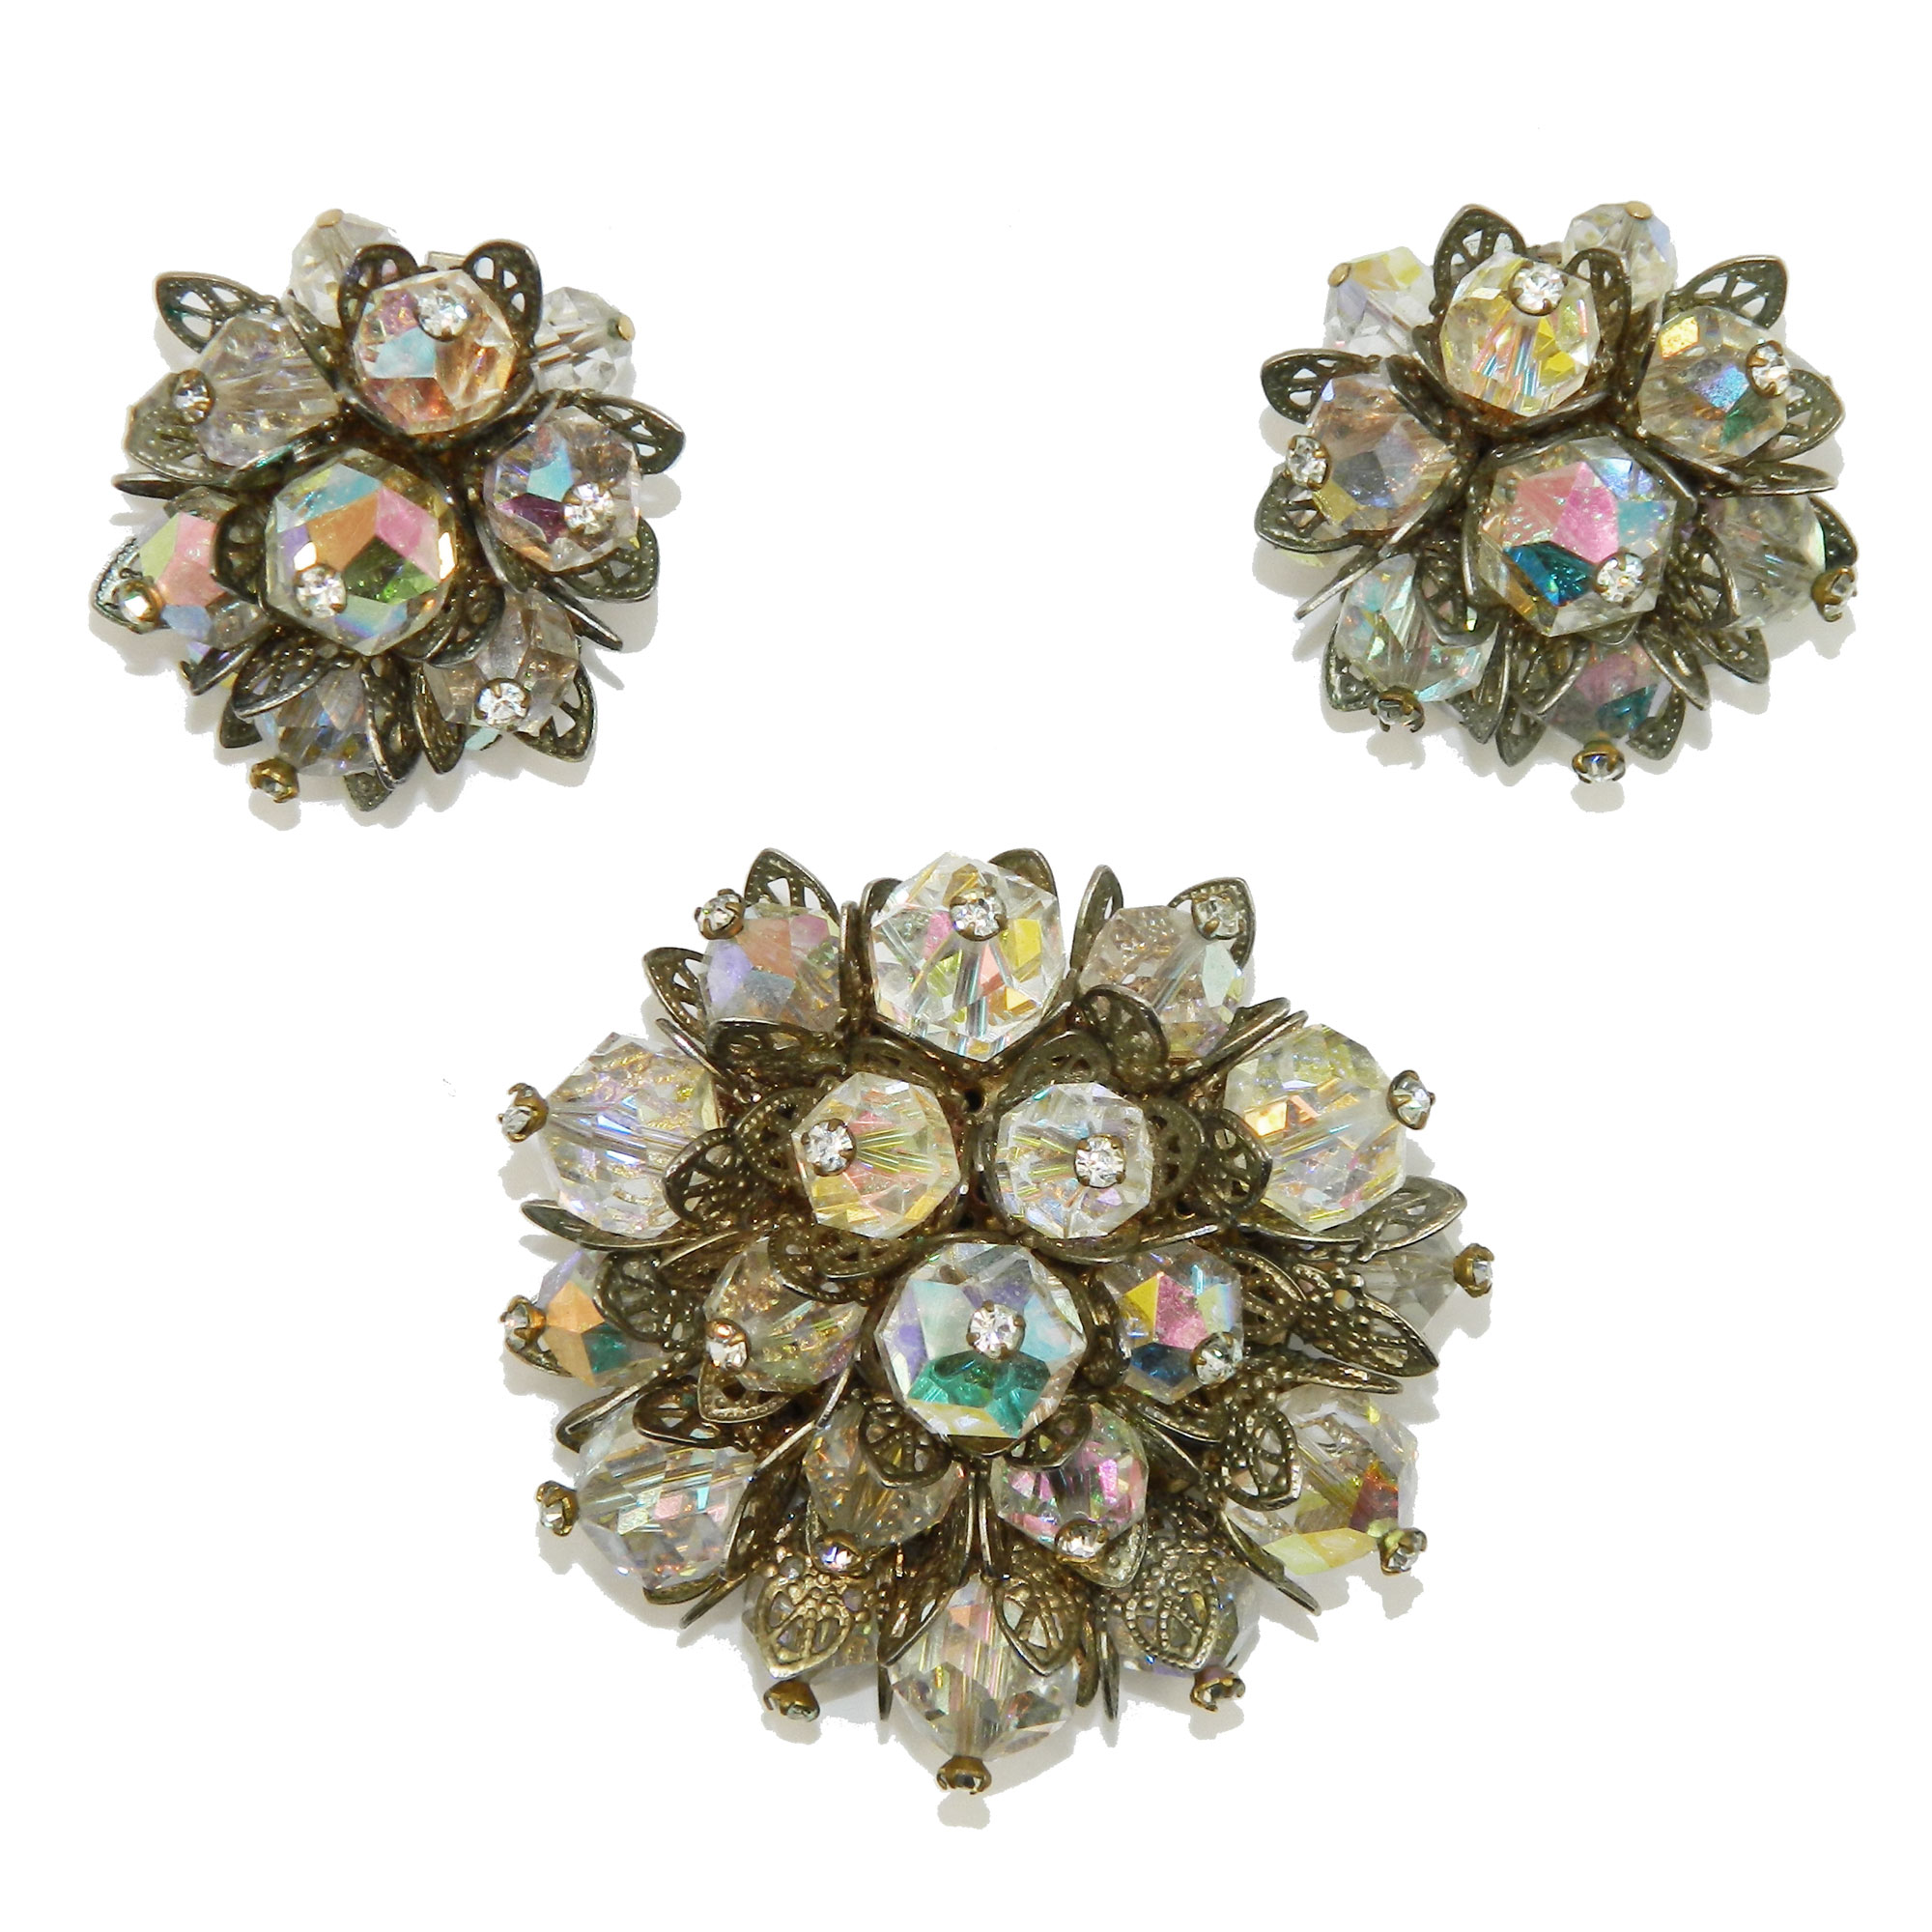 1950s Laguna crystal brooch and earring set